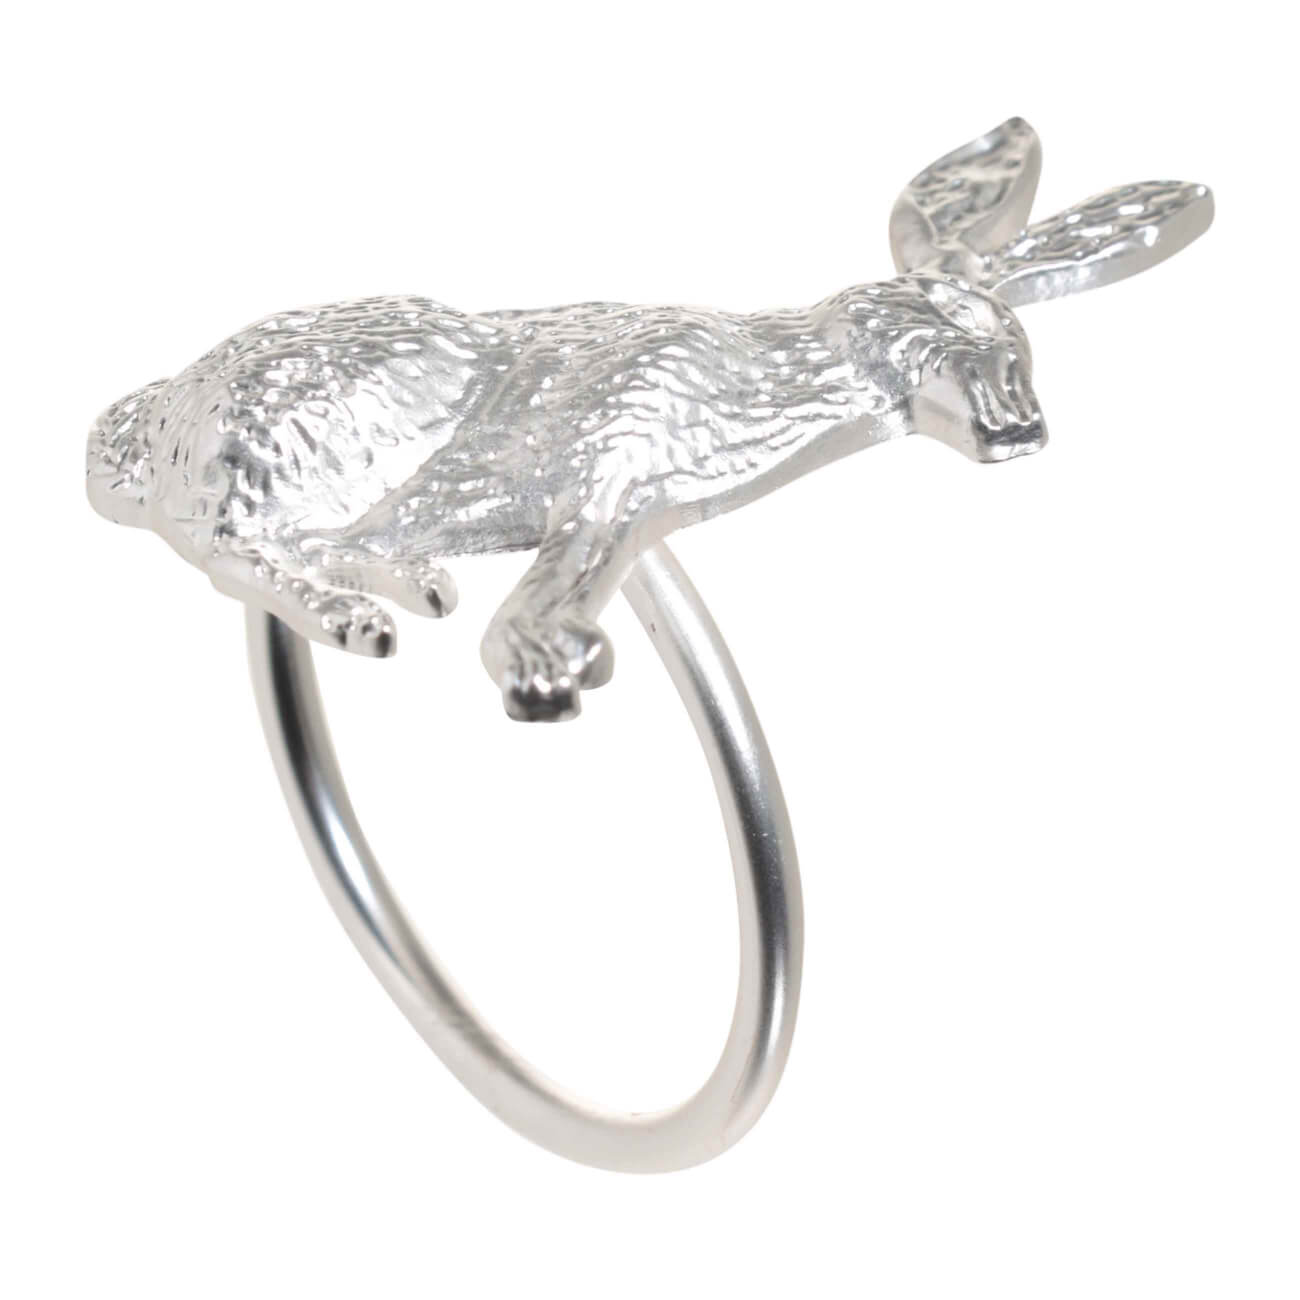 Кольцо для салфеток, 5 см, металл, серебристое, Кролик, Pure Easter кольцо для карниза d 35 38 мм 10 шт серебряный